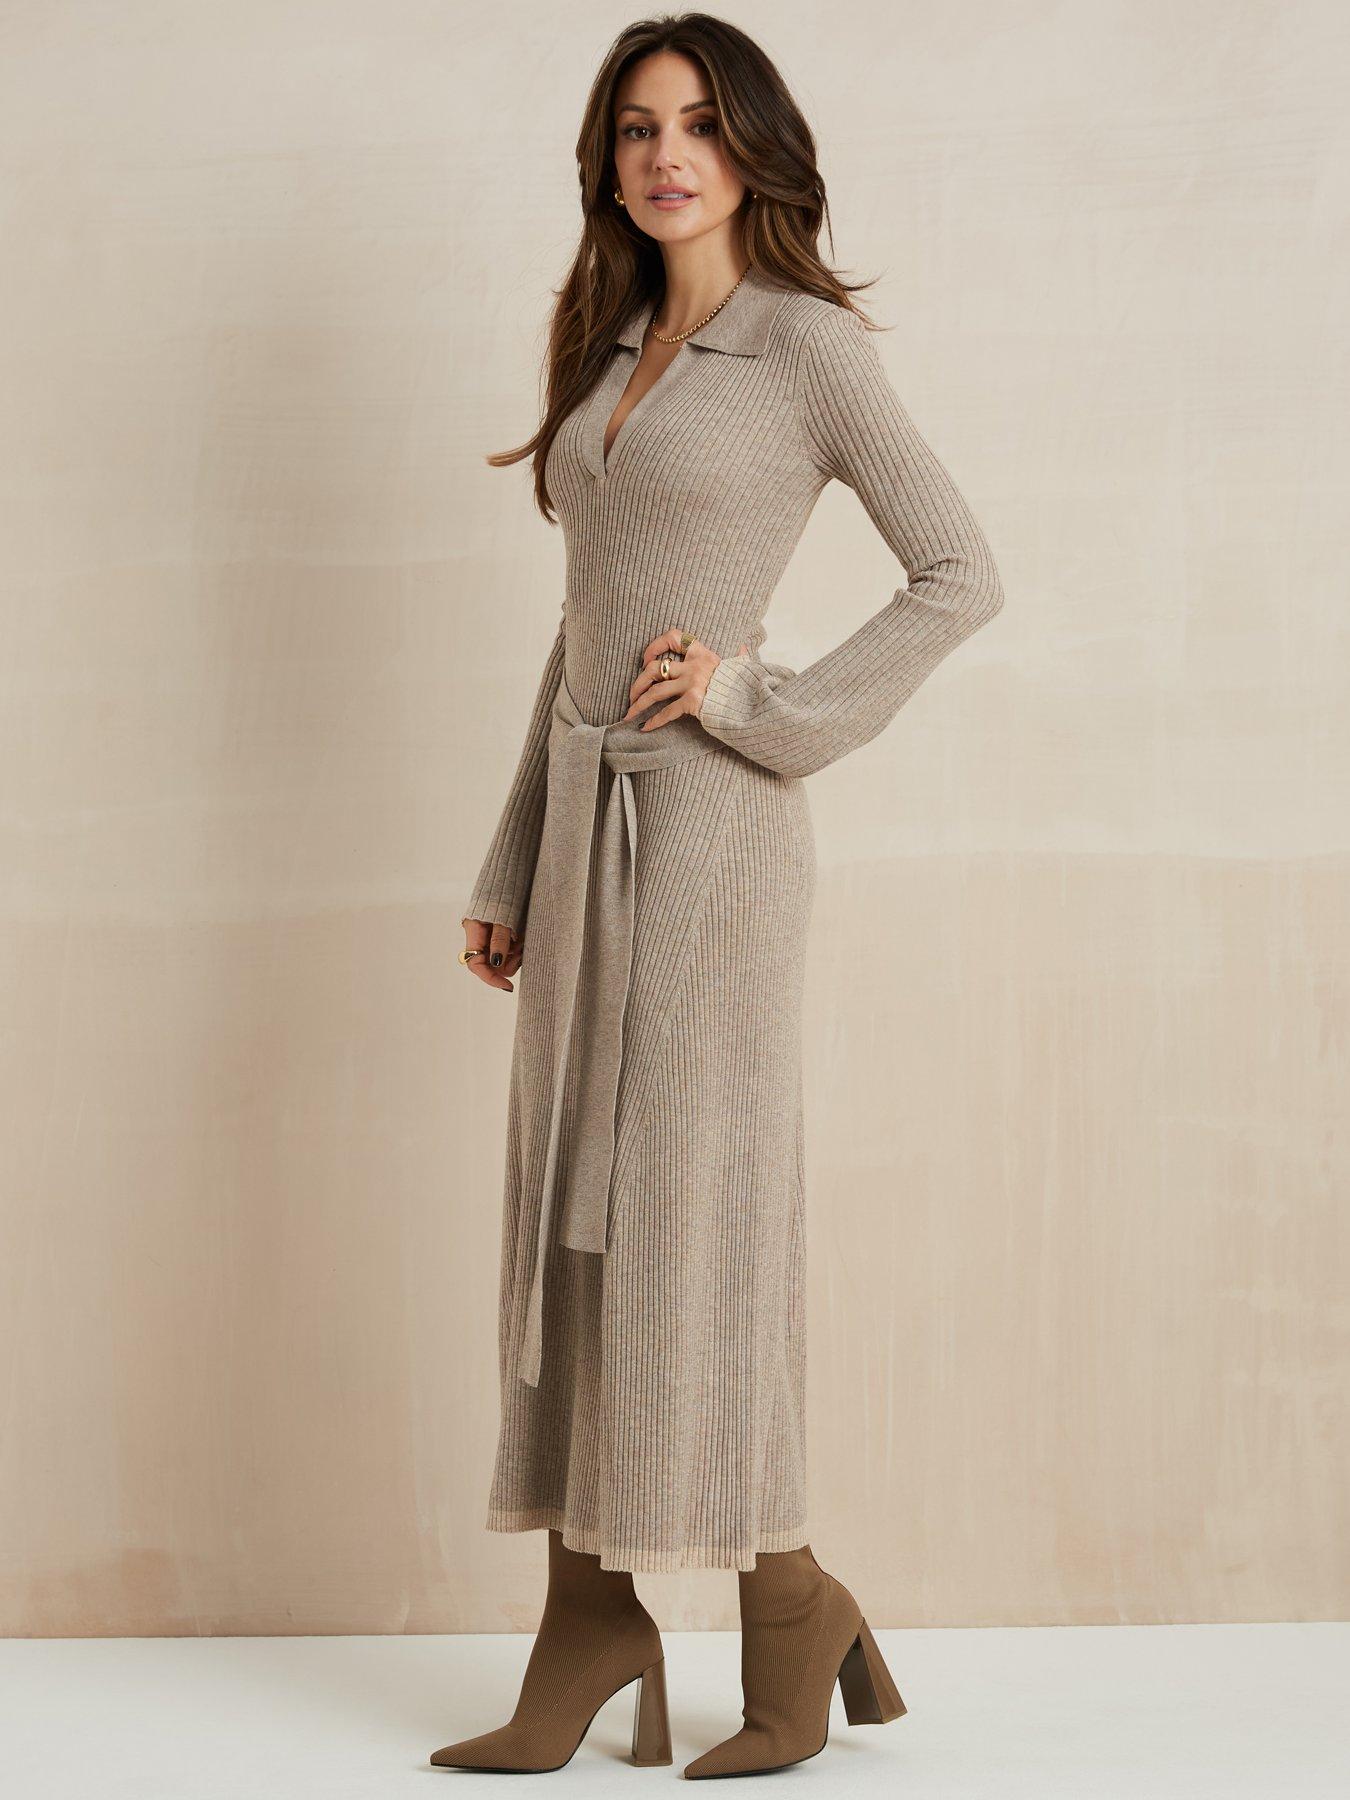 Michelle Keegan Premium Knitted Midi Dress - Camel